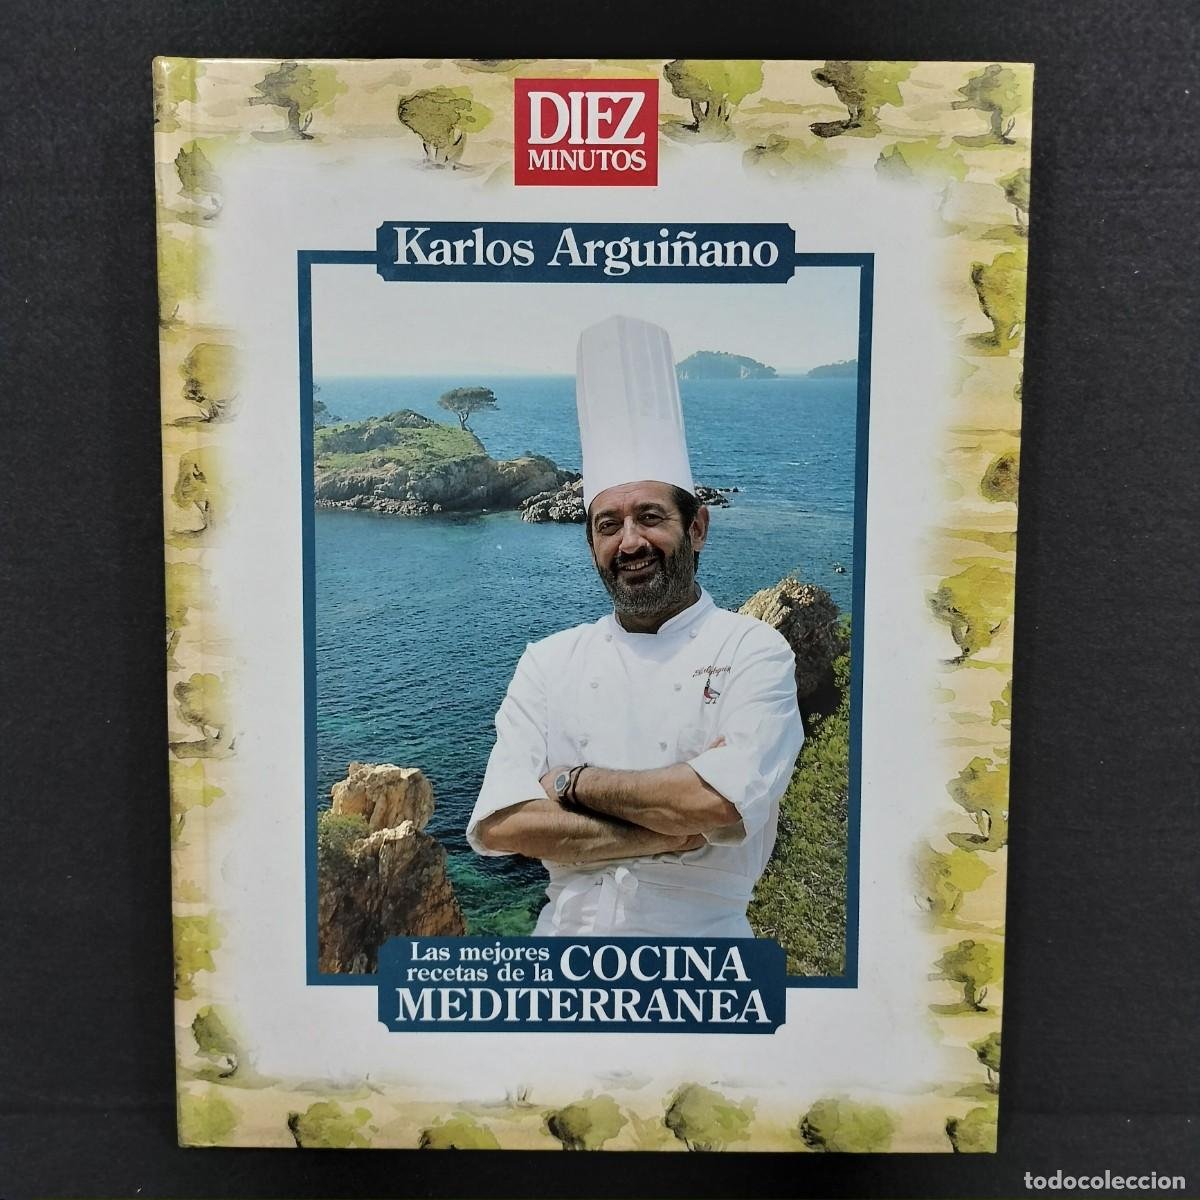 Libro de cocina Karlos Arguiñano de segunda mano por 10 EUR en